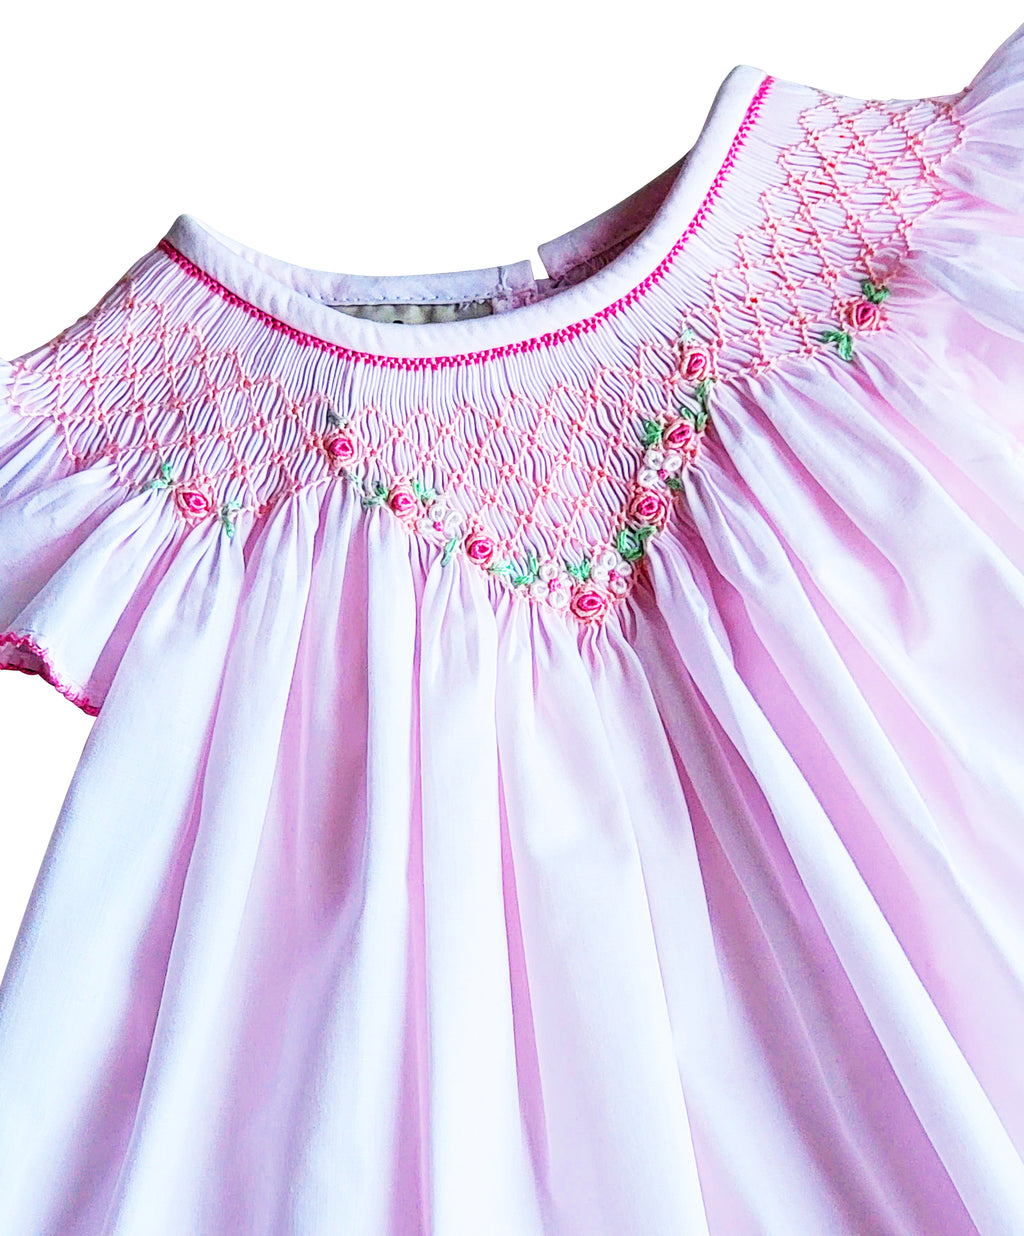 Pink baby girl's smocked bishop dress. - Little Threads Inc. Children's Clothing